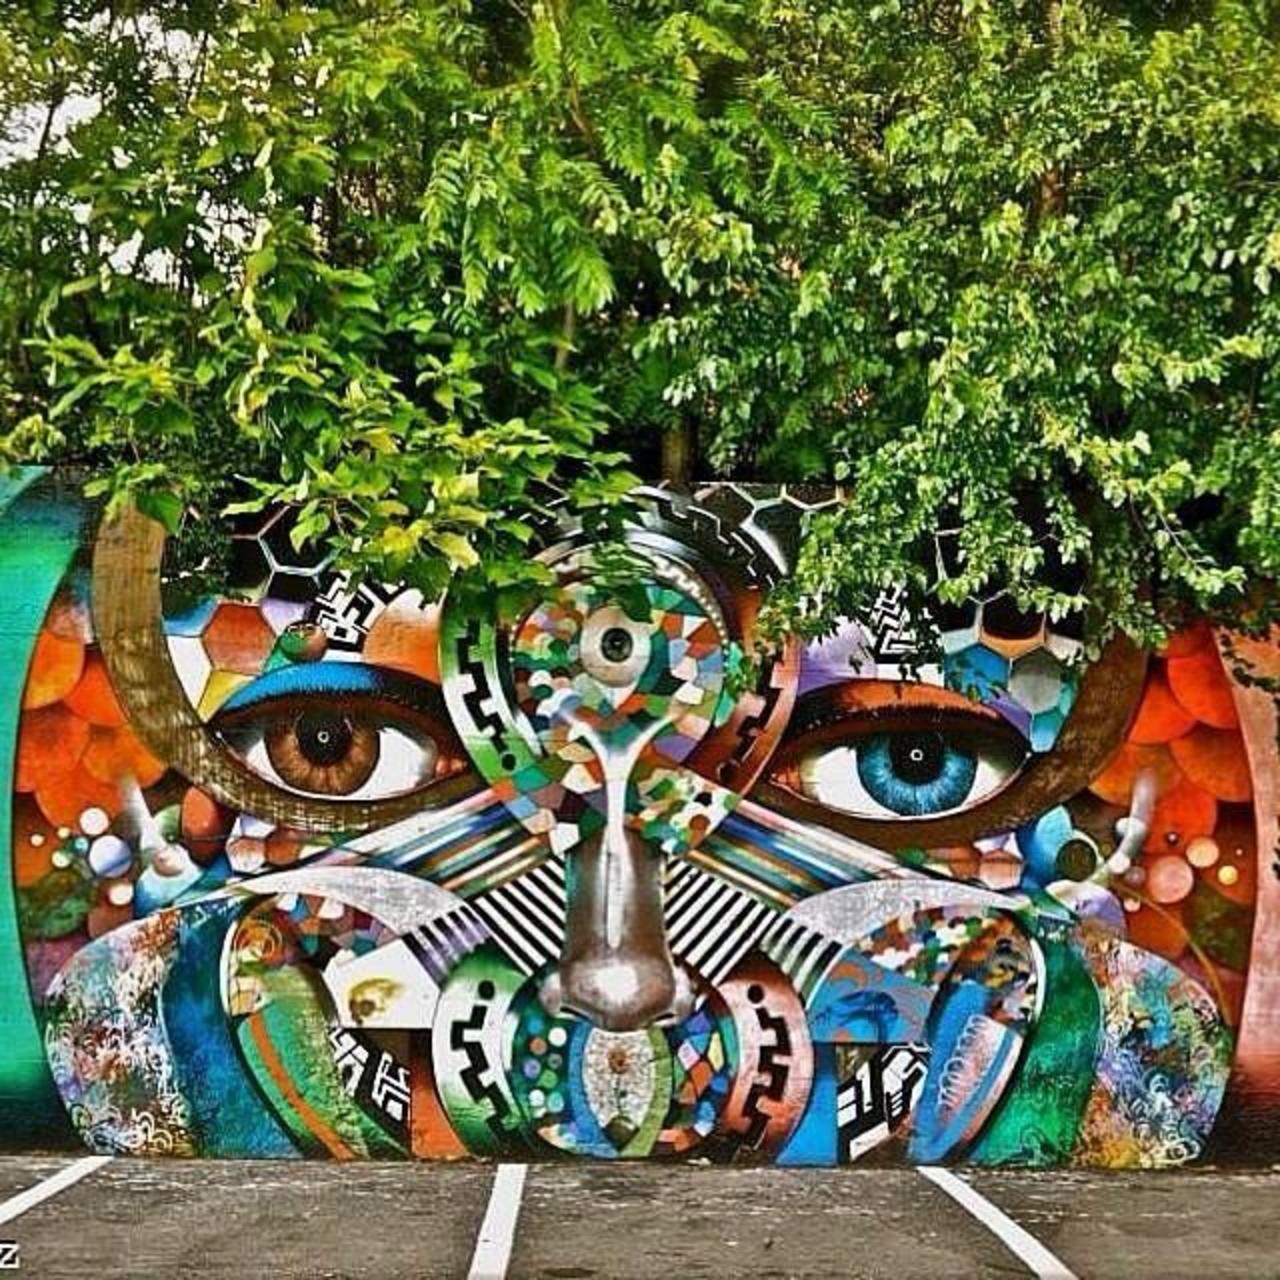 https://goo.gl/7kifqw Artist chorboogie new nature & Street Art piece. #art #mural #graffiti #streetart http://t.co/qz6JYdYt7y